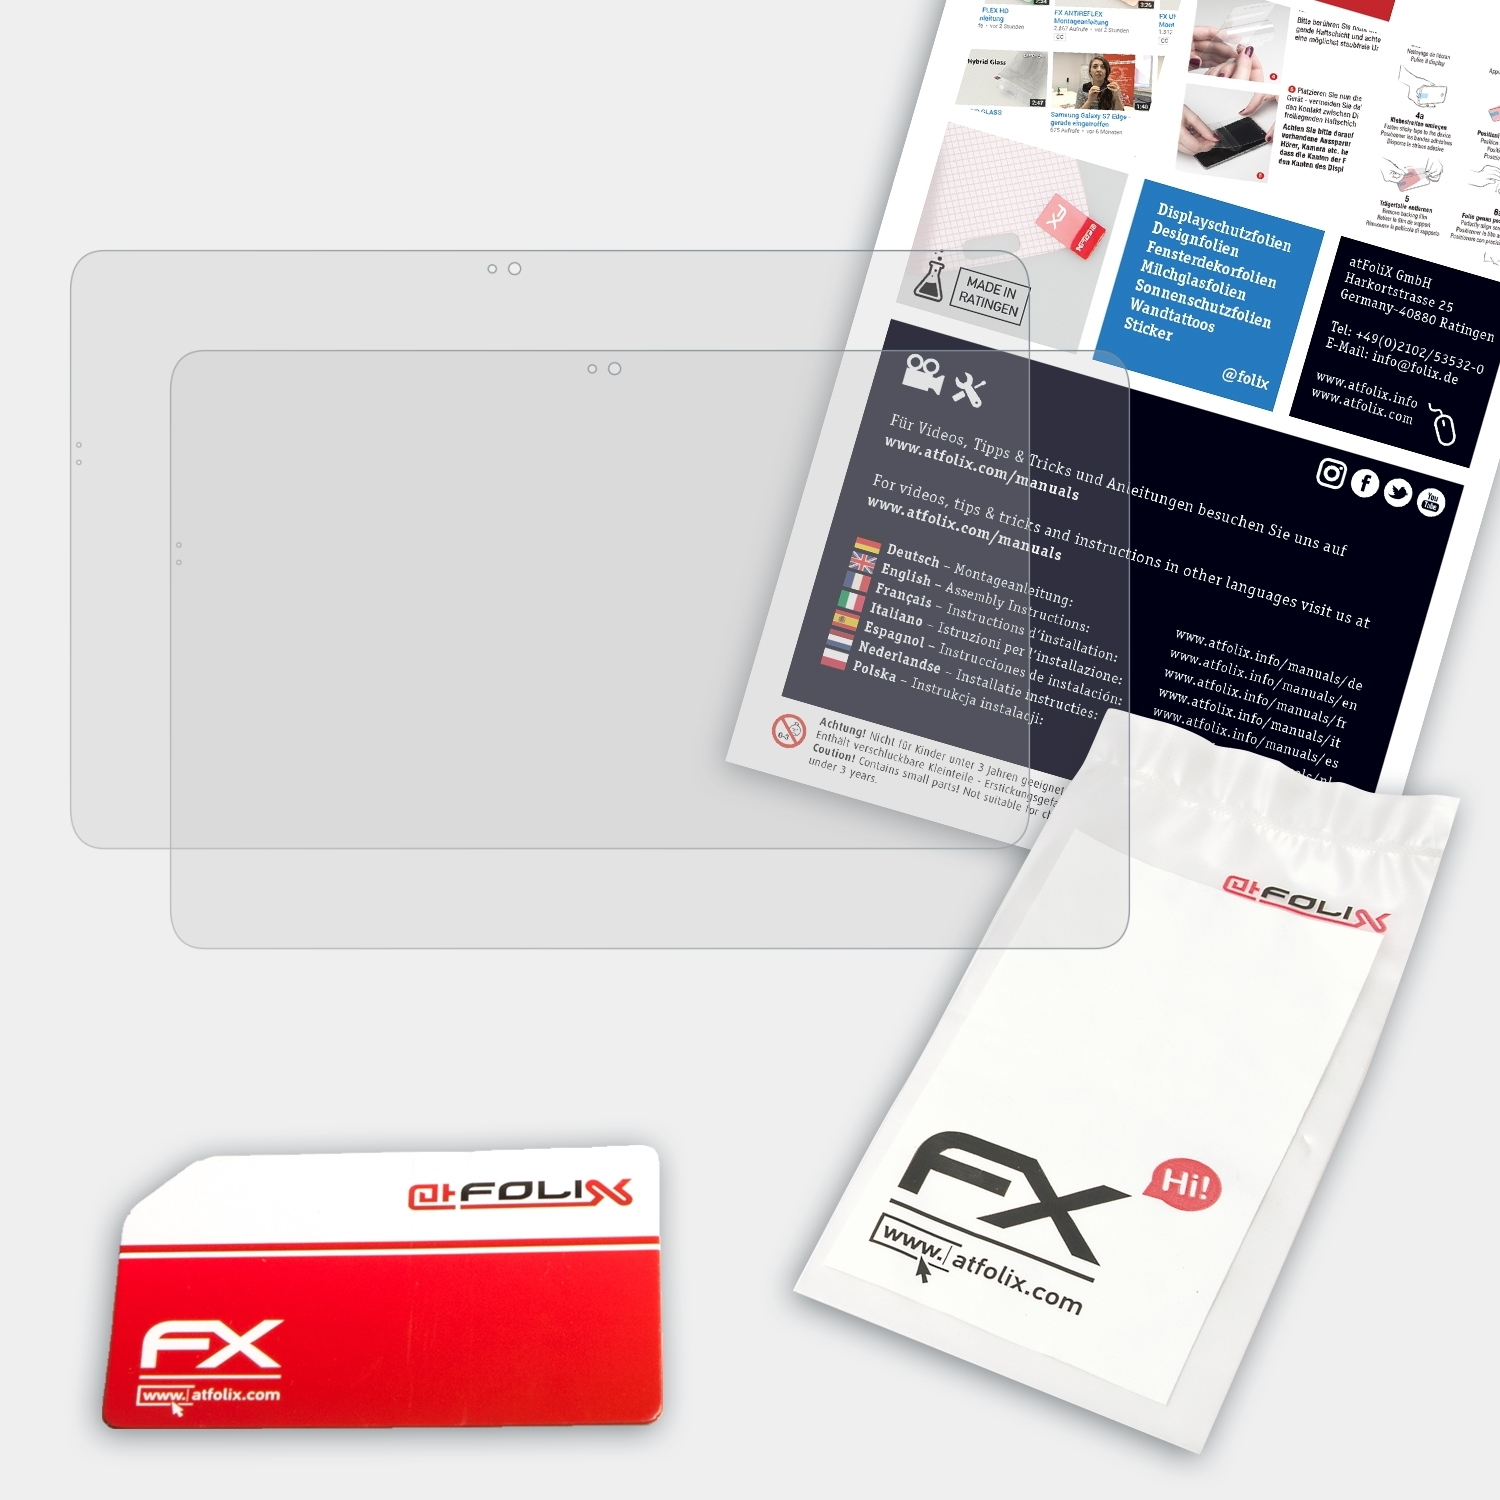 FX-Antireflex ATFOLIX Fujitsu 2x Stylistic R726) Displayschutz(für